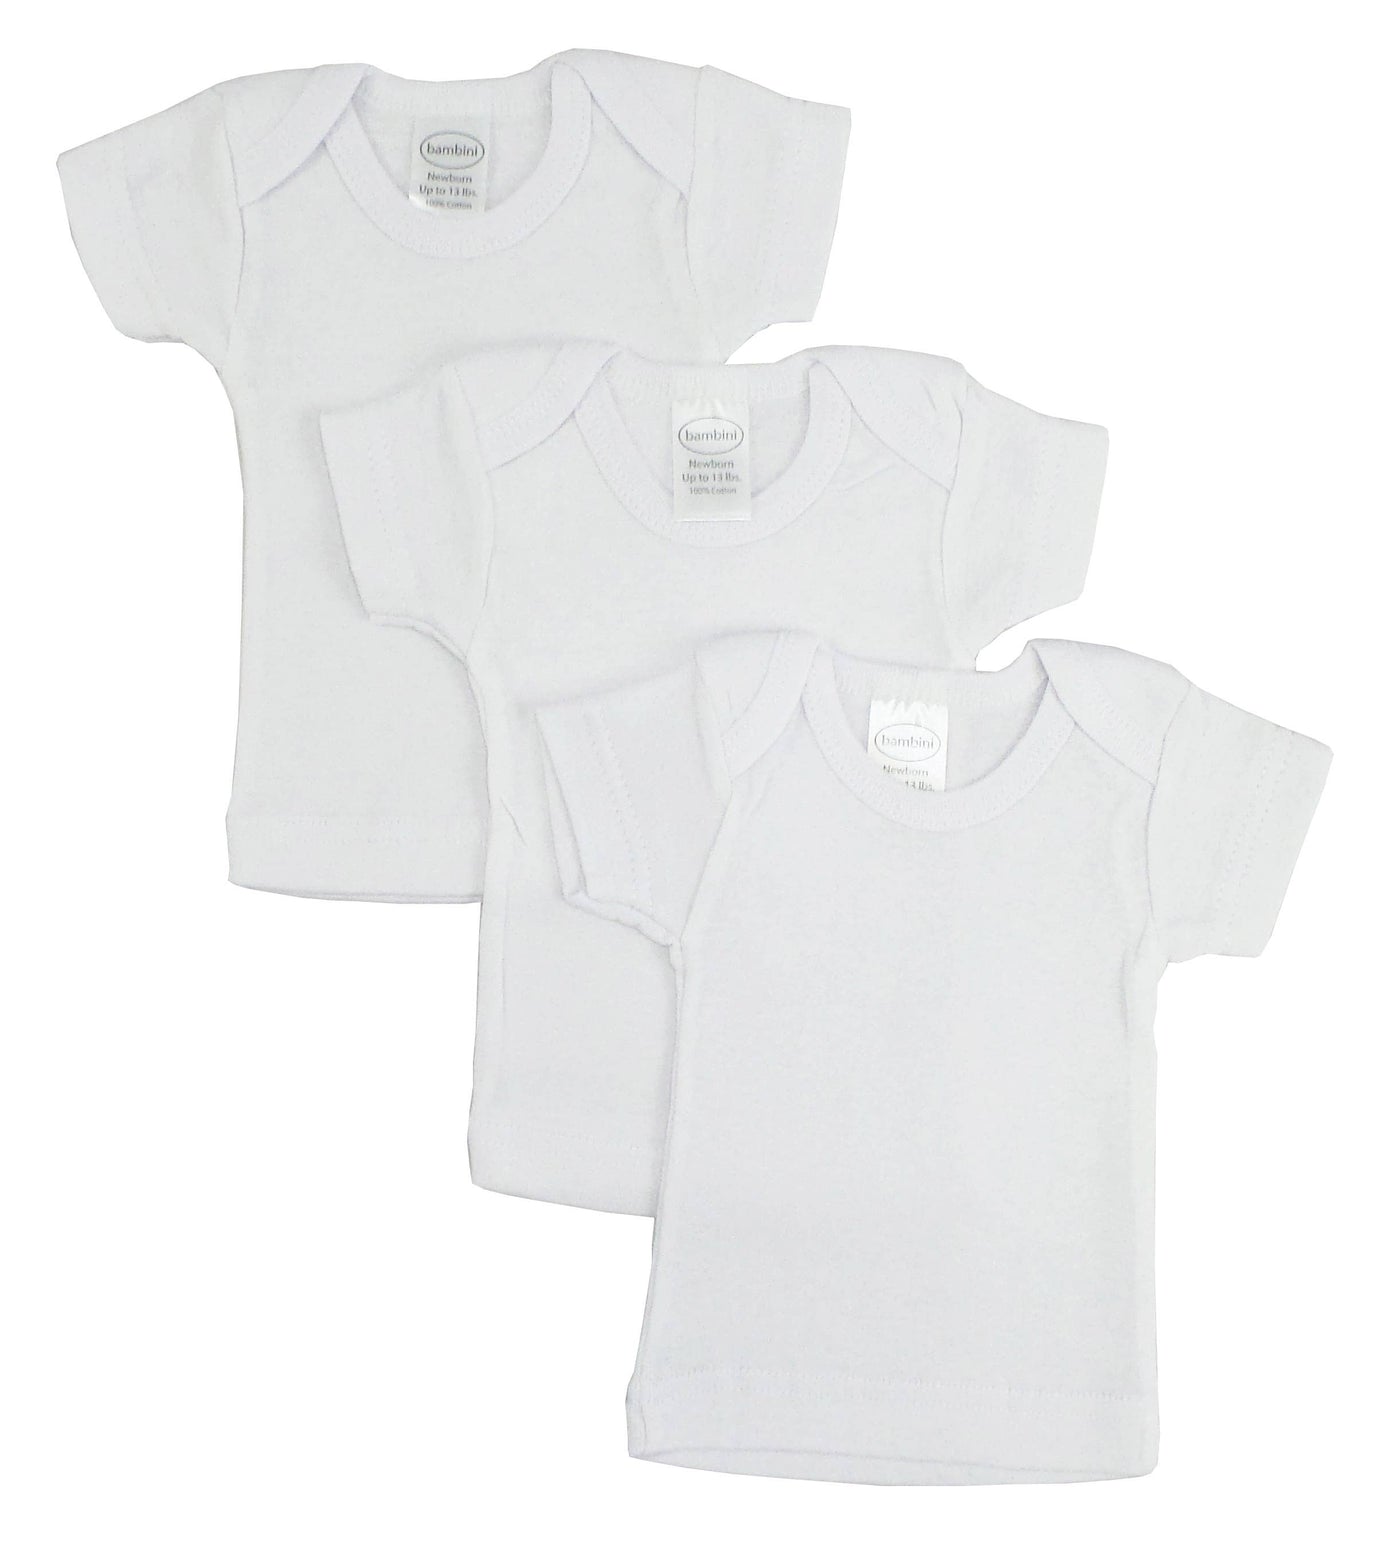 Short Sleeve Printed Tee Shirt Set - White-Baby Romper-Anatomy Clothing Boutique in Brenham, Texas